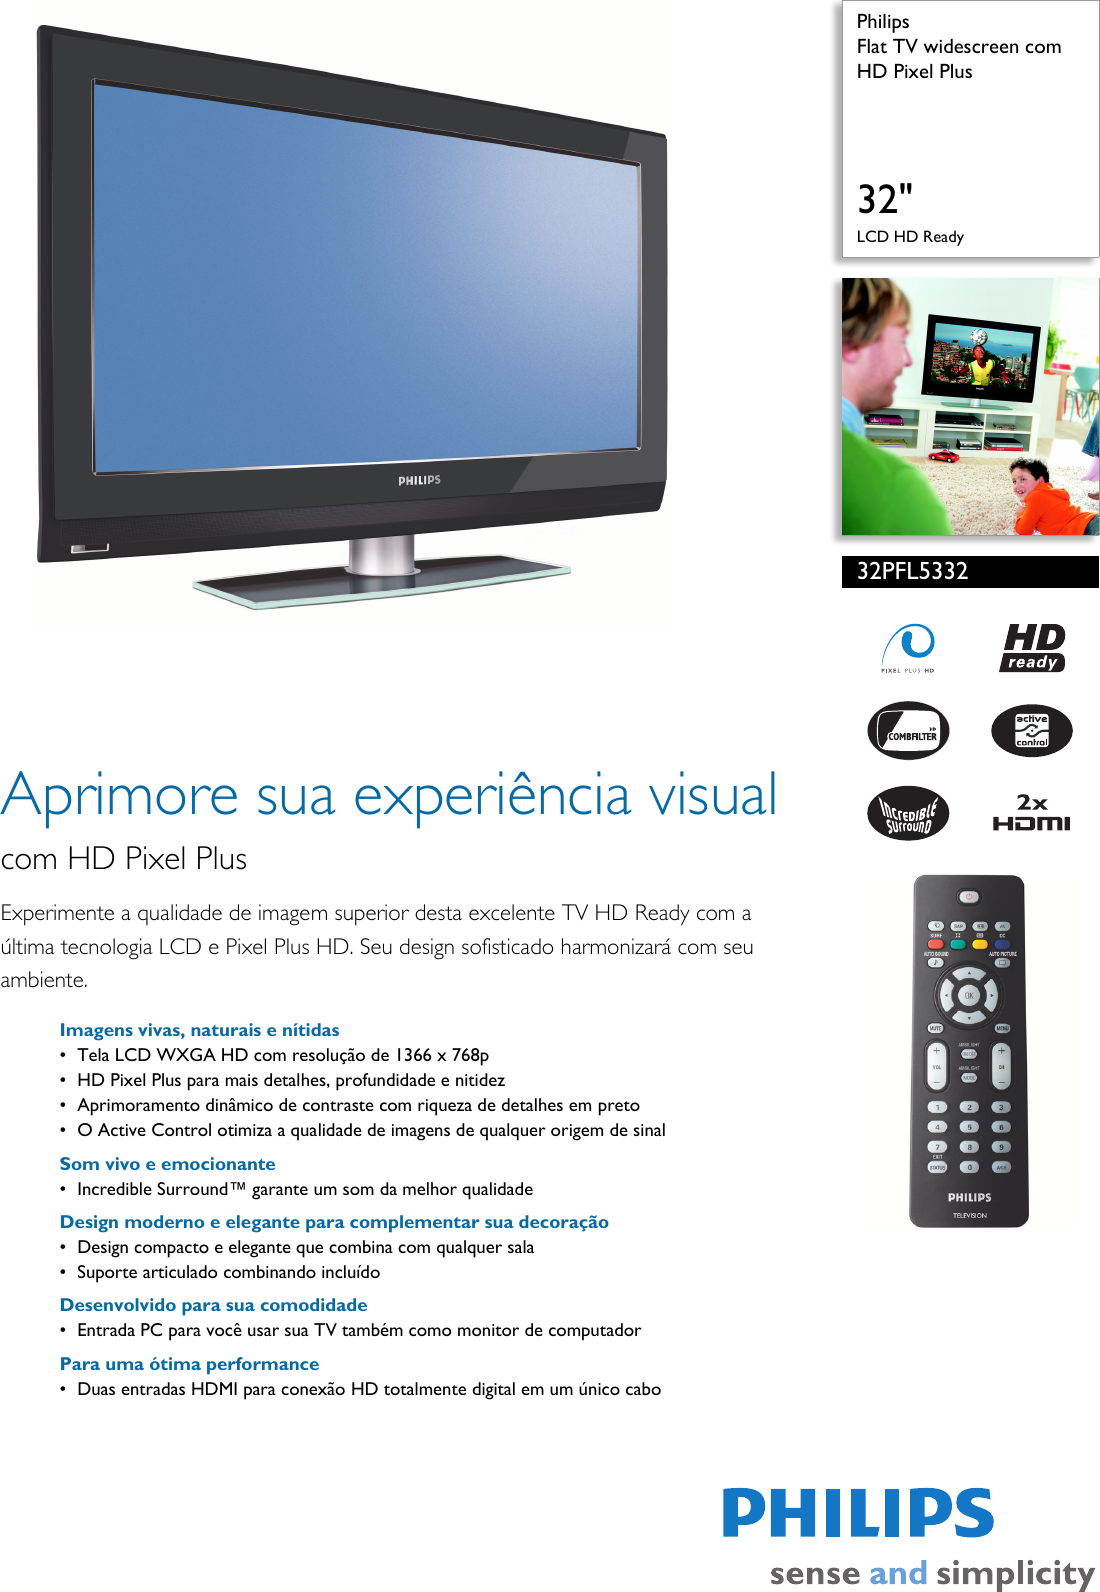 Page 1 of 3 - Philips 32PFL5332/78 Flat TV Widescreen Com HD Pixel Plus User Manual Folheto 32pfl5332 78 Pss Brpbr